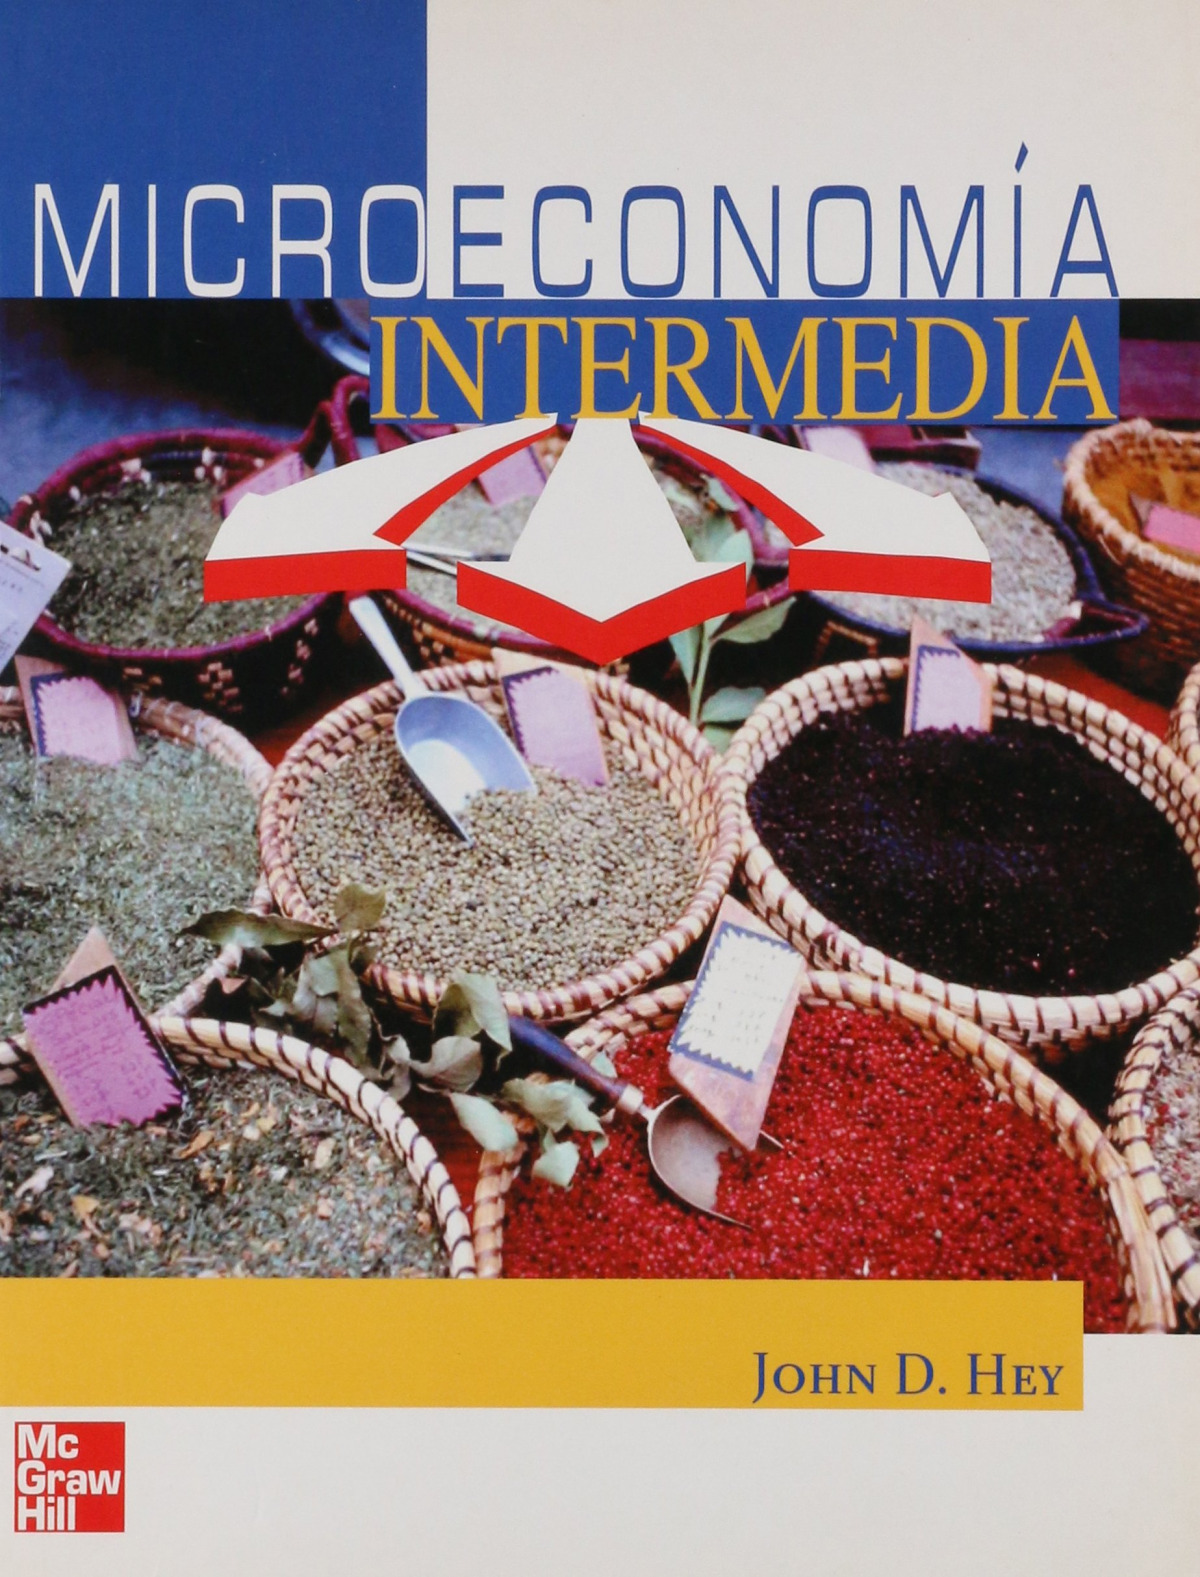 * microeconomia intermedia - Hey, John D.